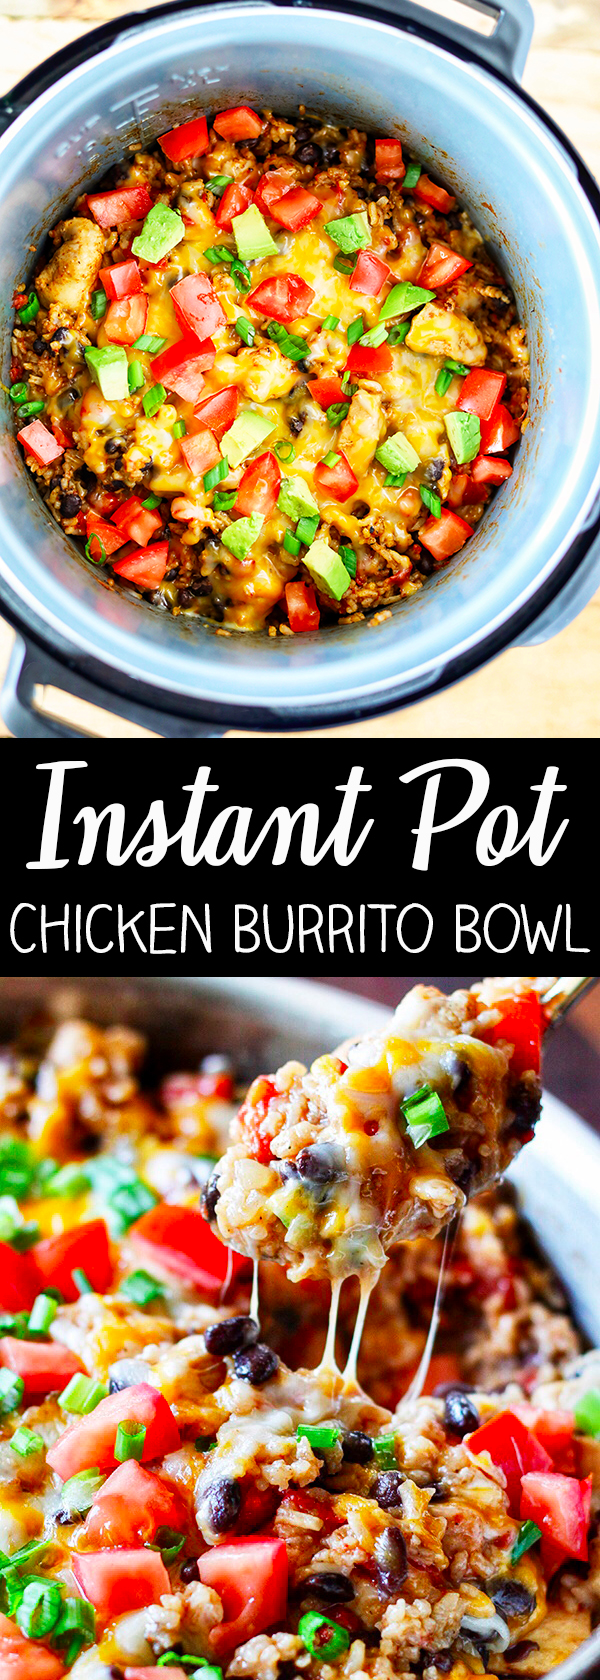 Instant Pot Chicken Burrito Bowl -   19 healthy instant pot recipes chicken burrito bowl ideas